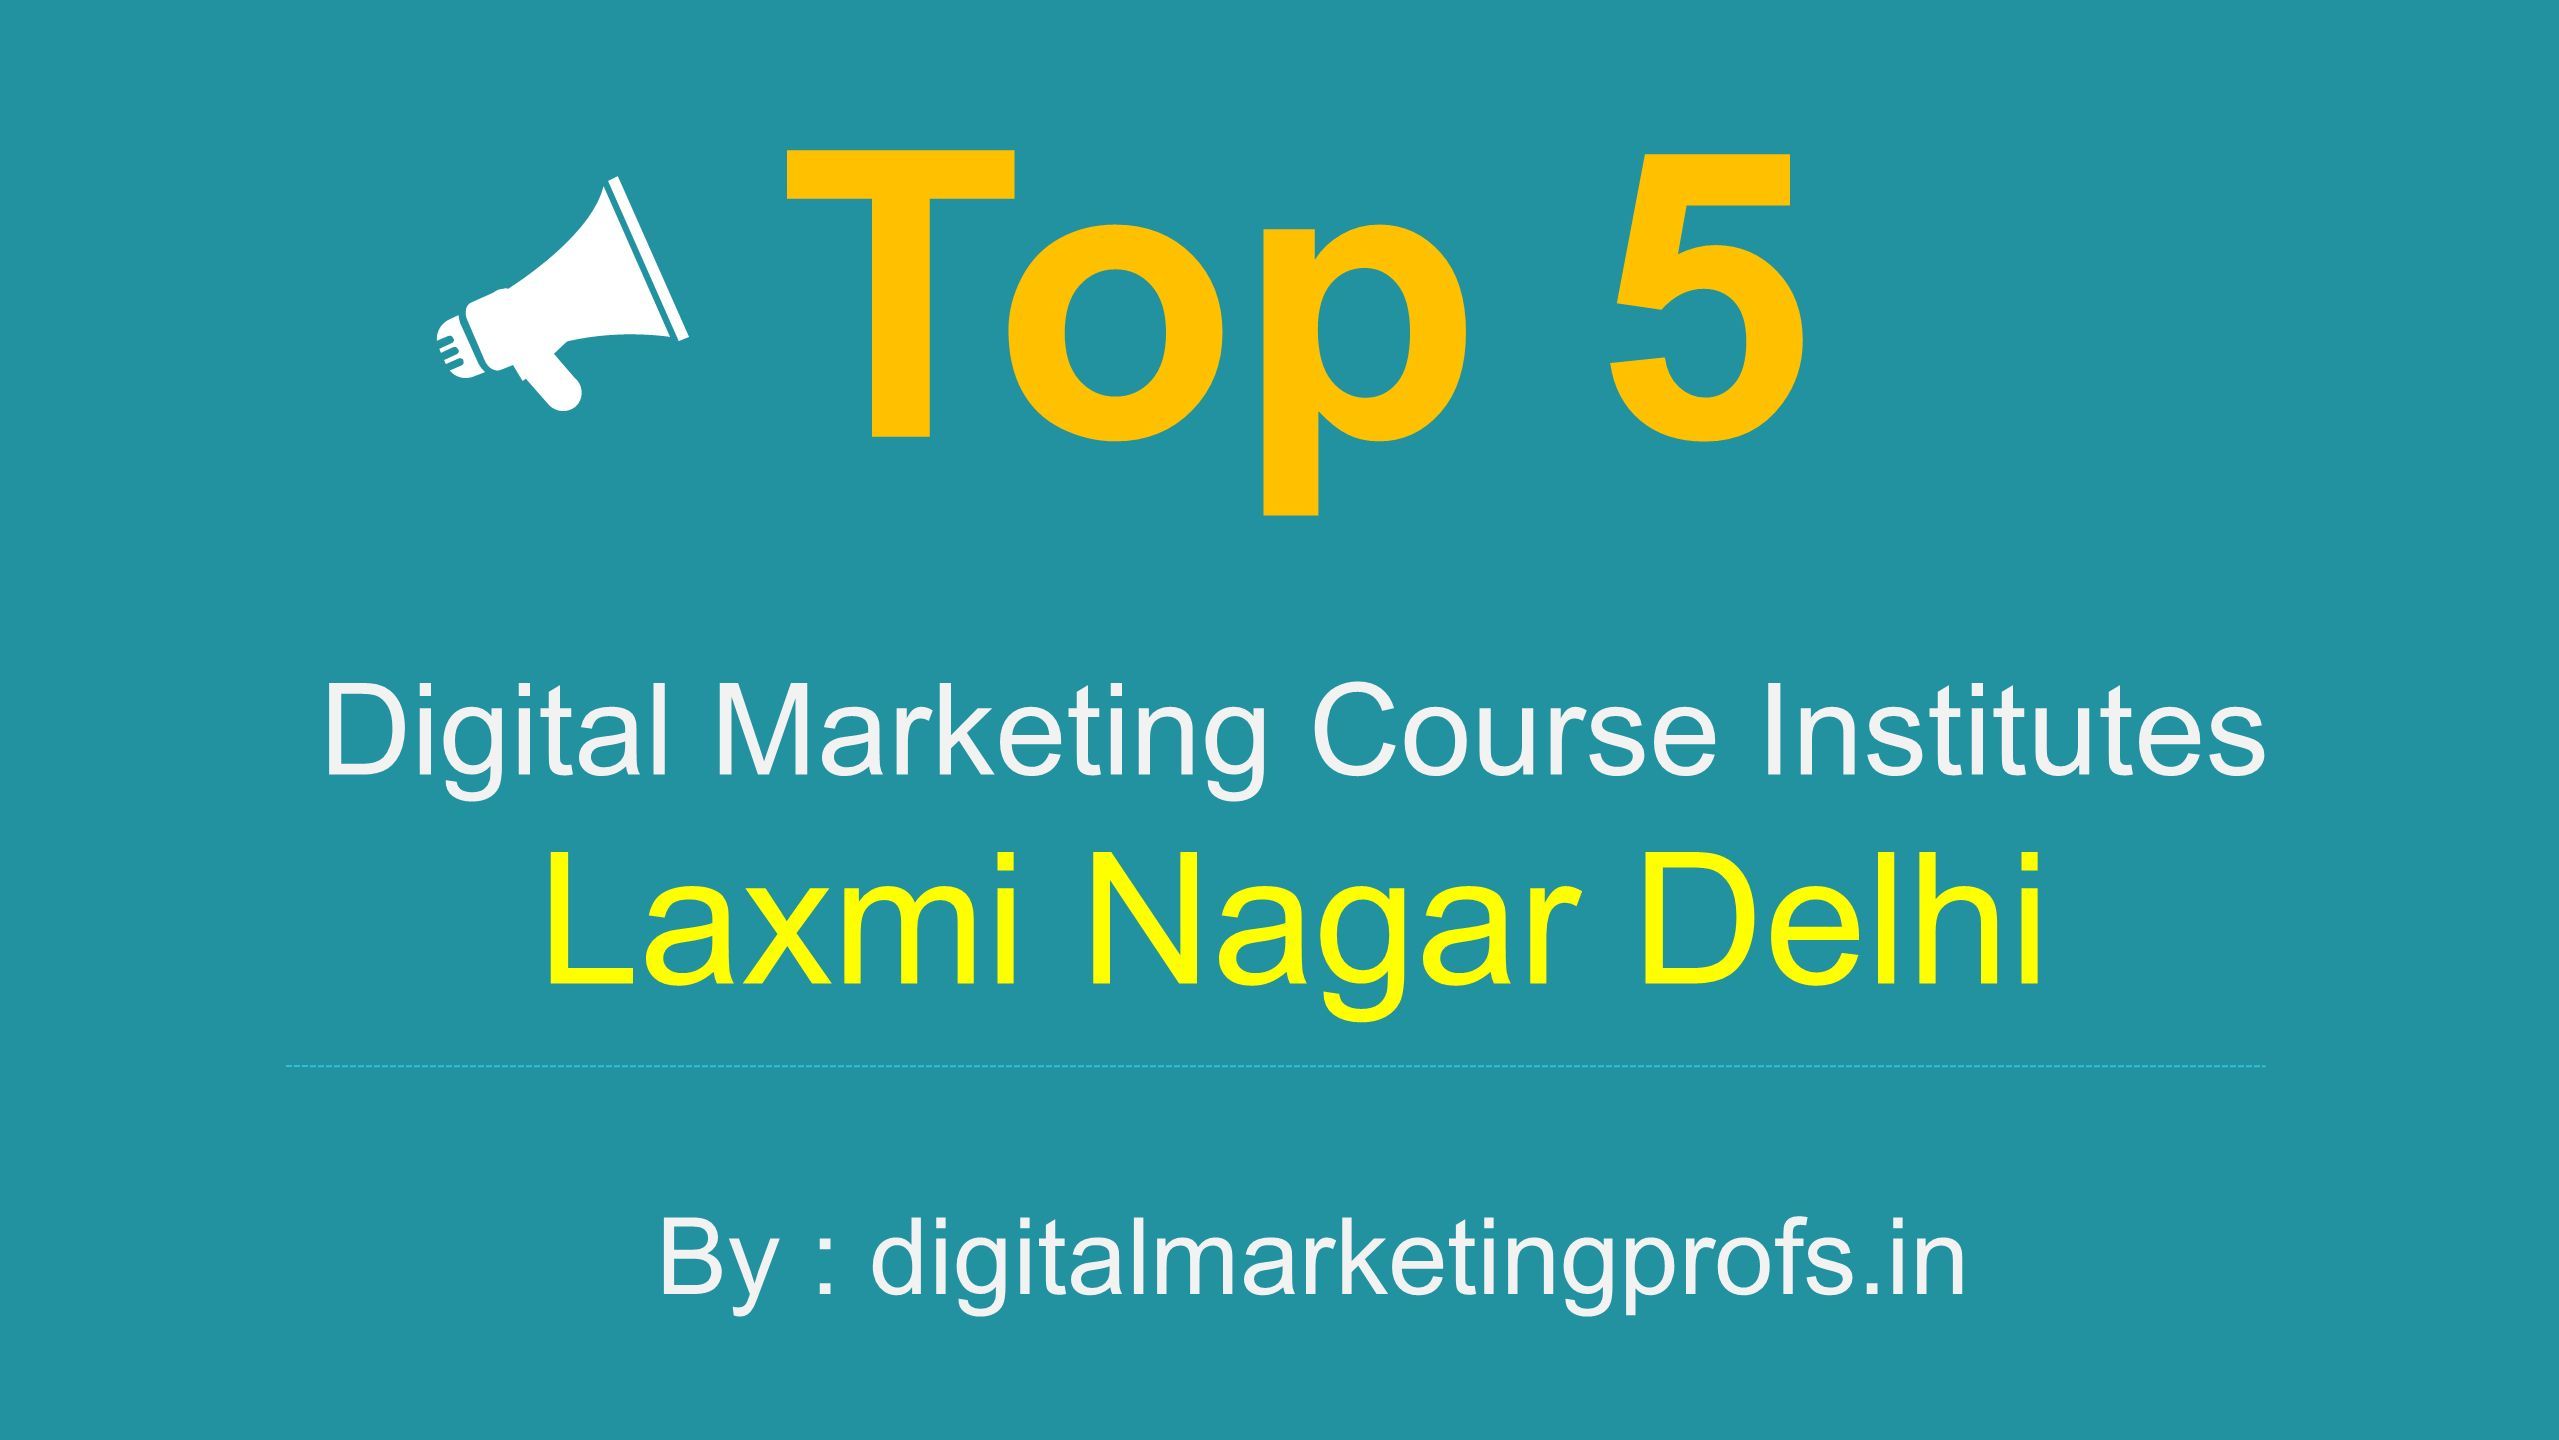 Digital Marketing Course Institutes Laxmi Nagar Delhi Top 5 By : digitalmarketingprofs.in